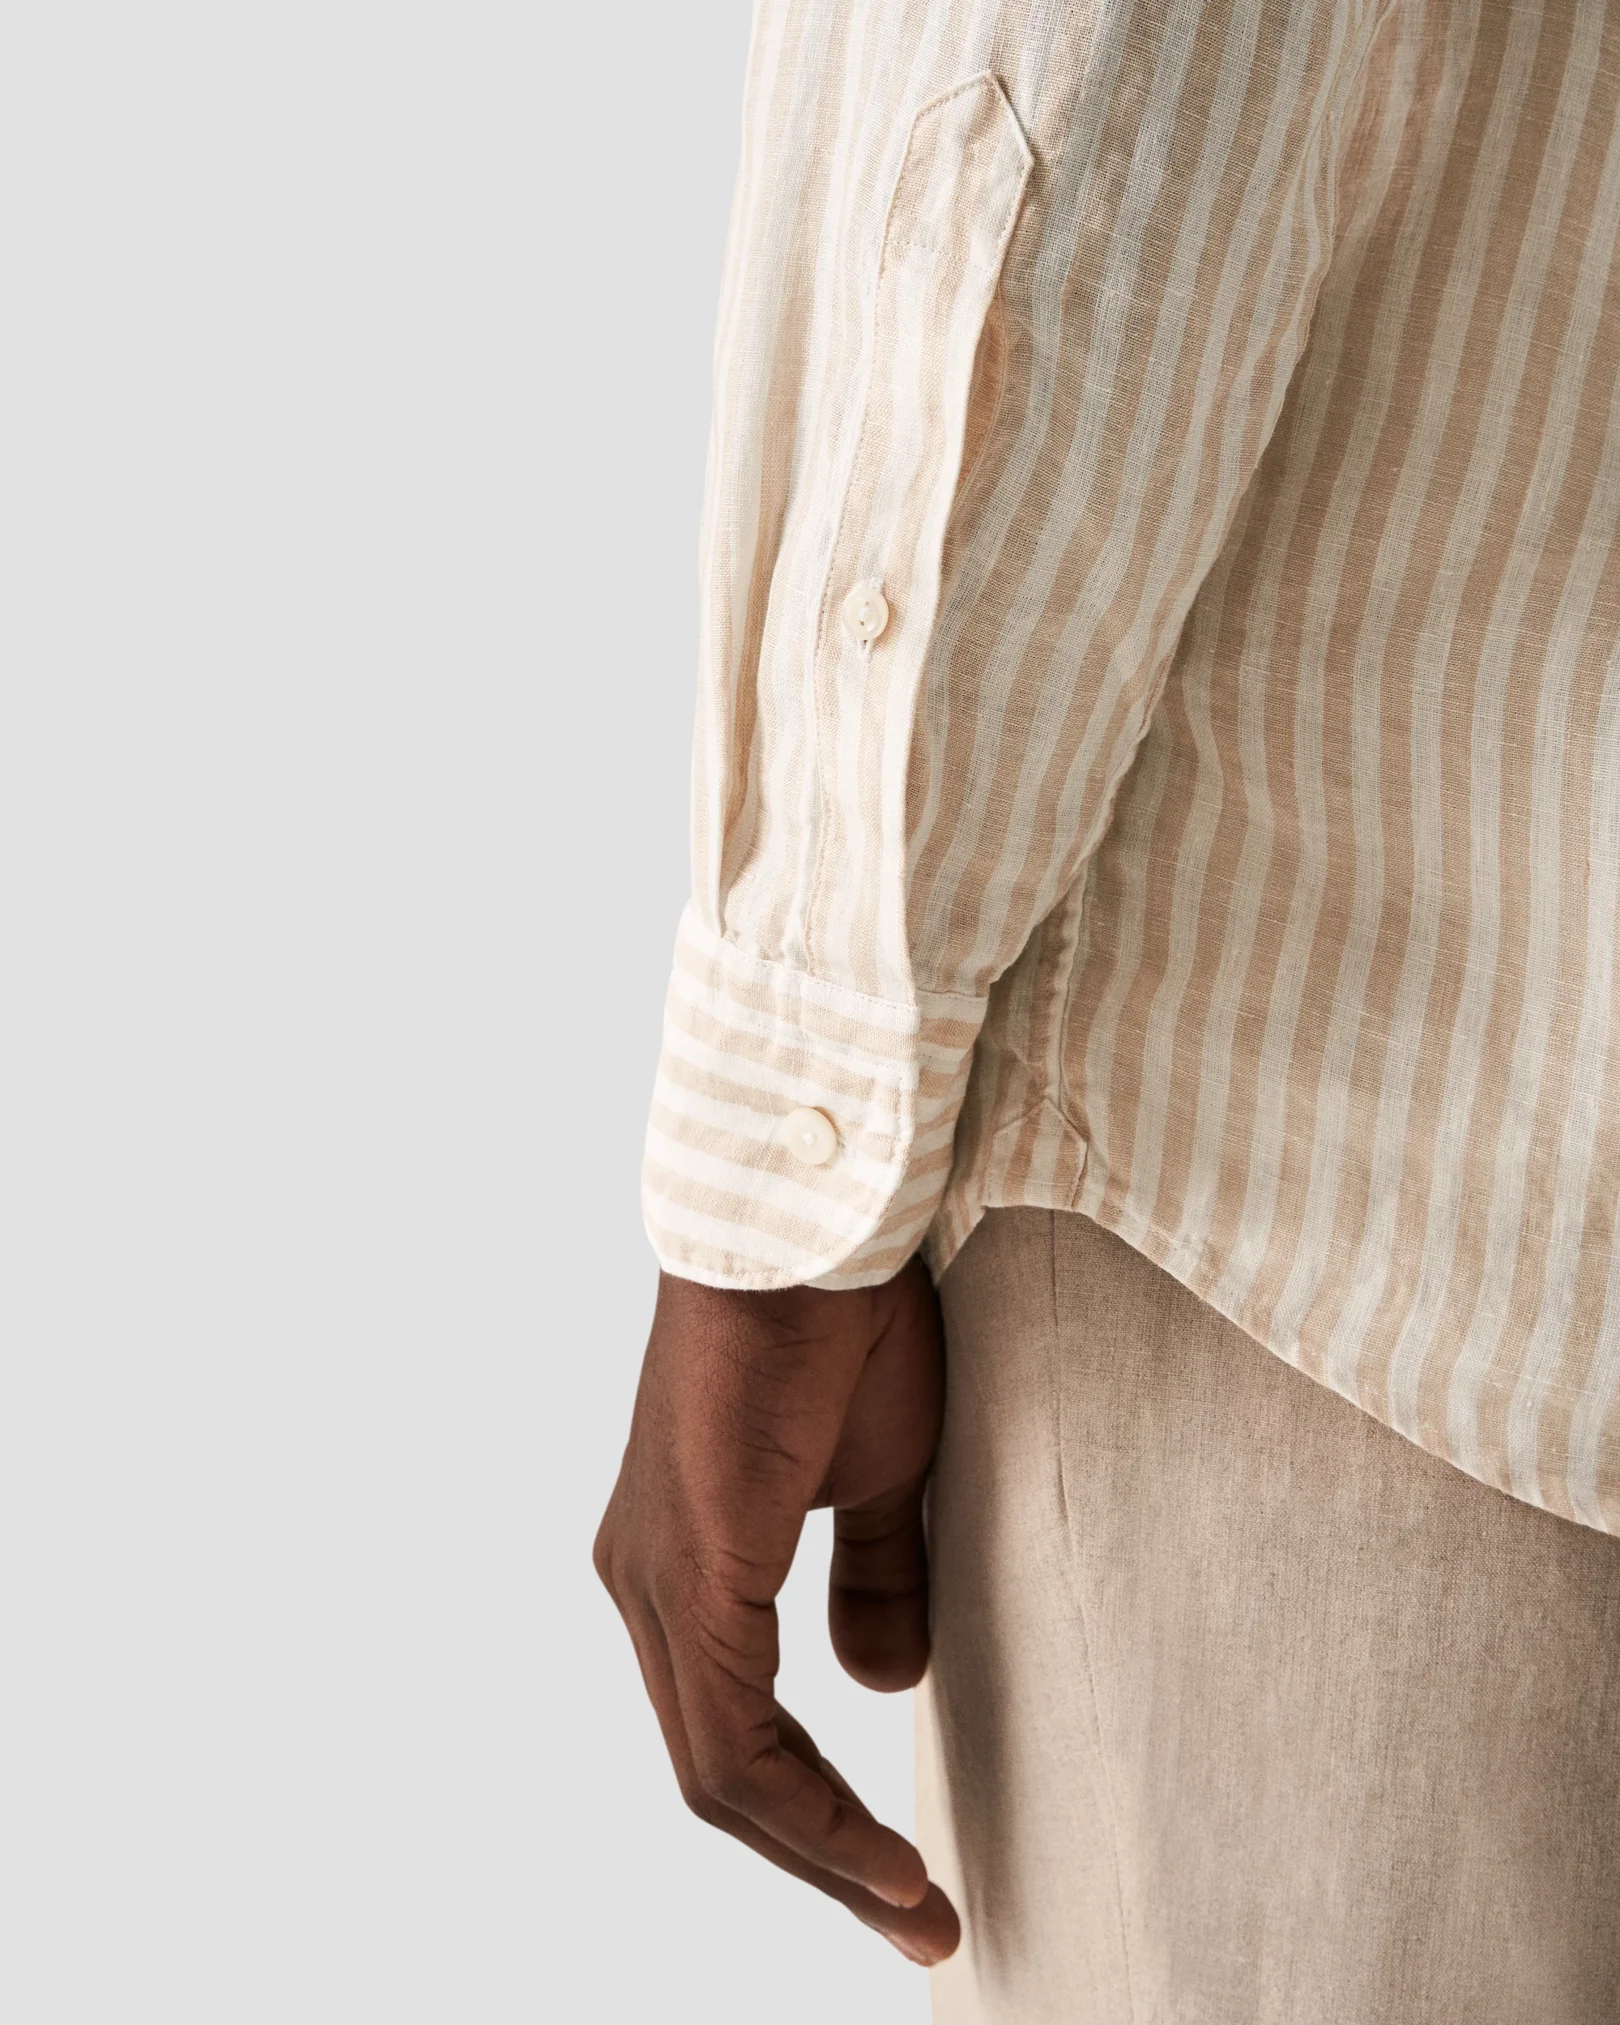 Eton - Light Brown Striped Linen Shirt